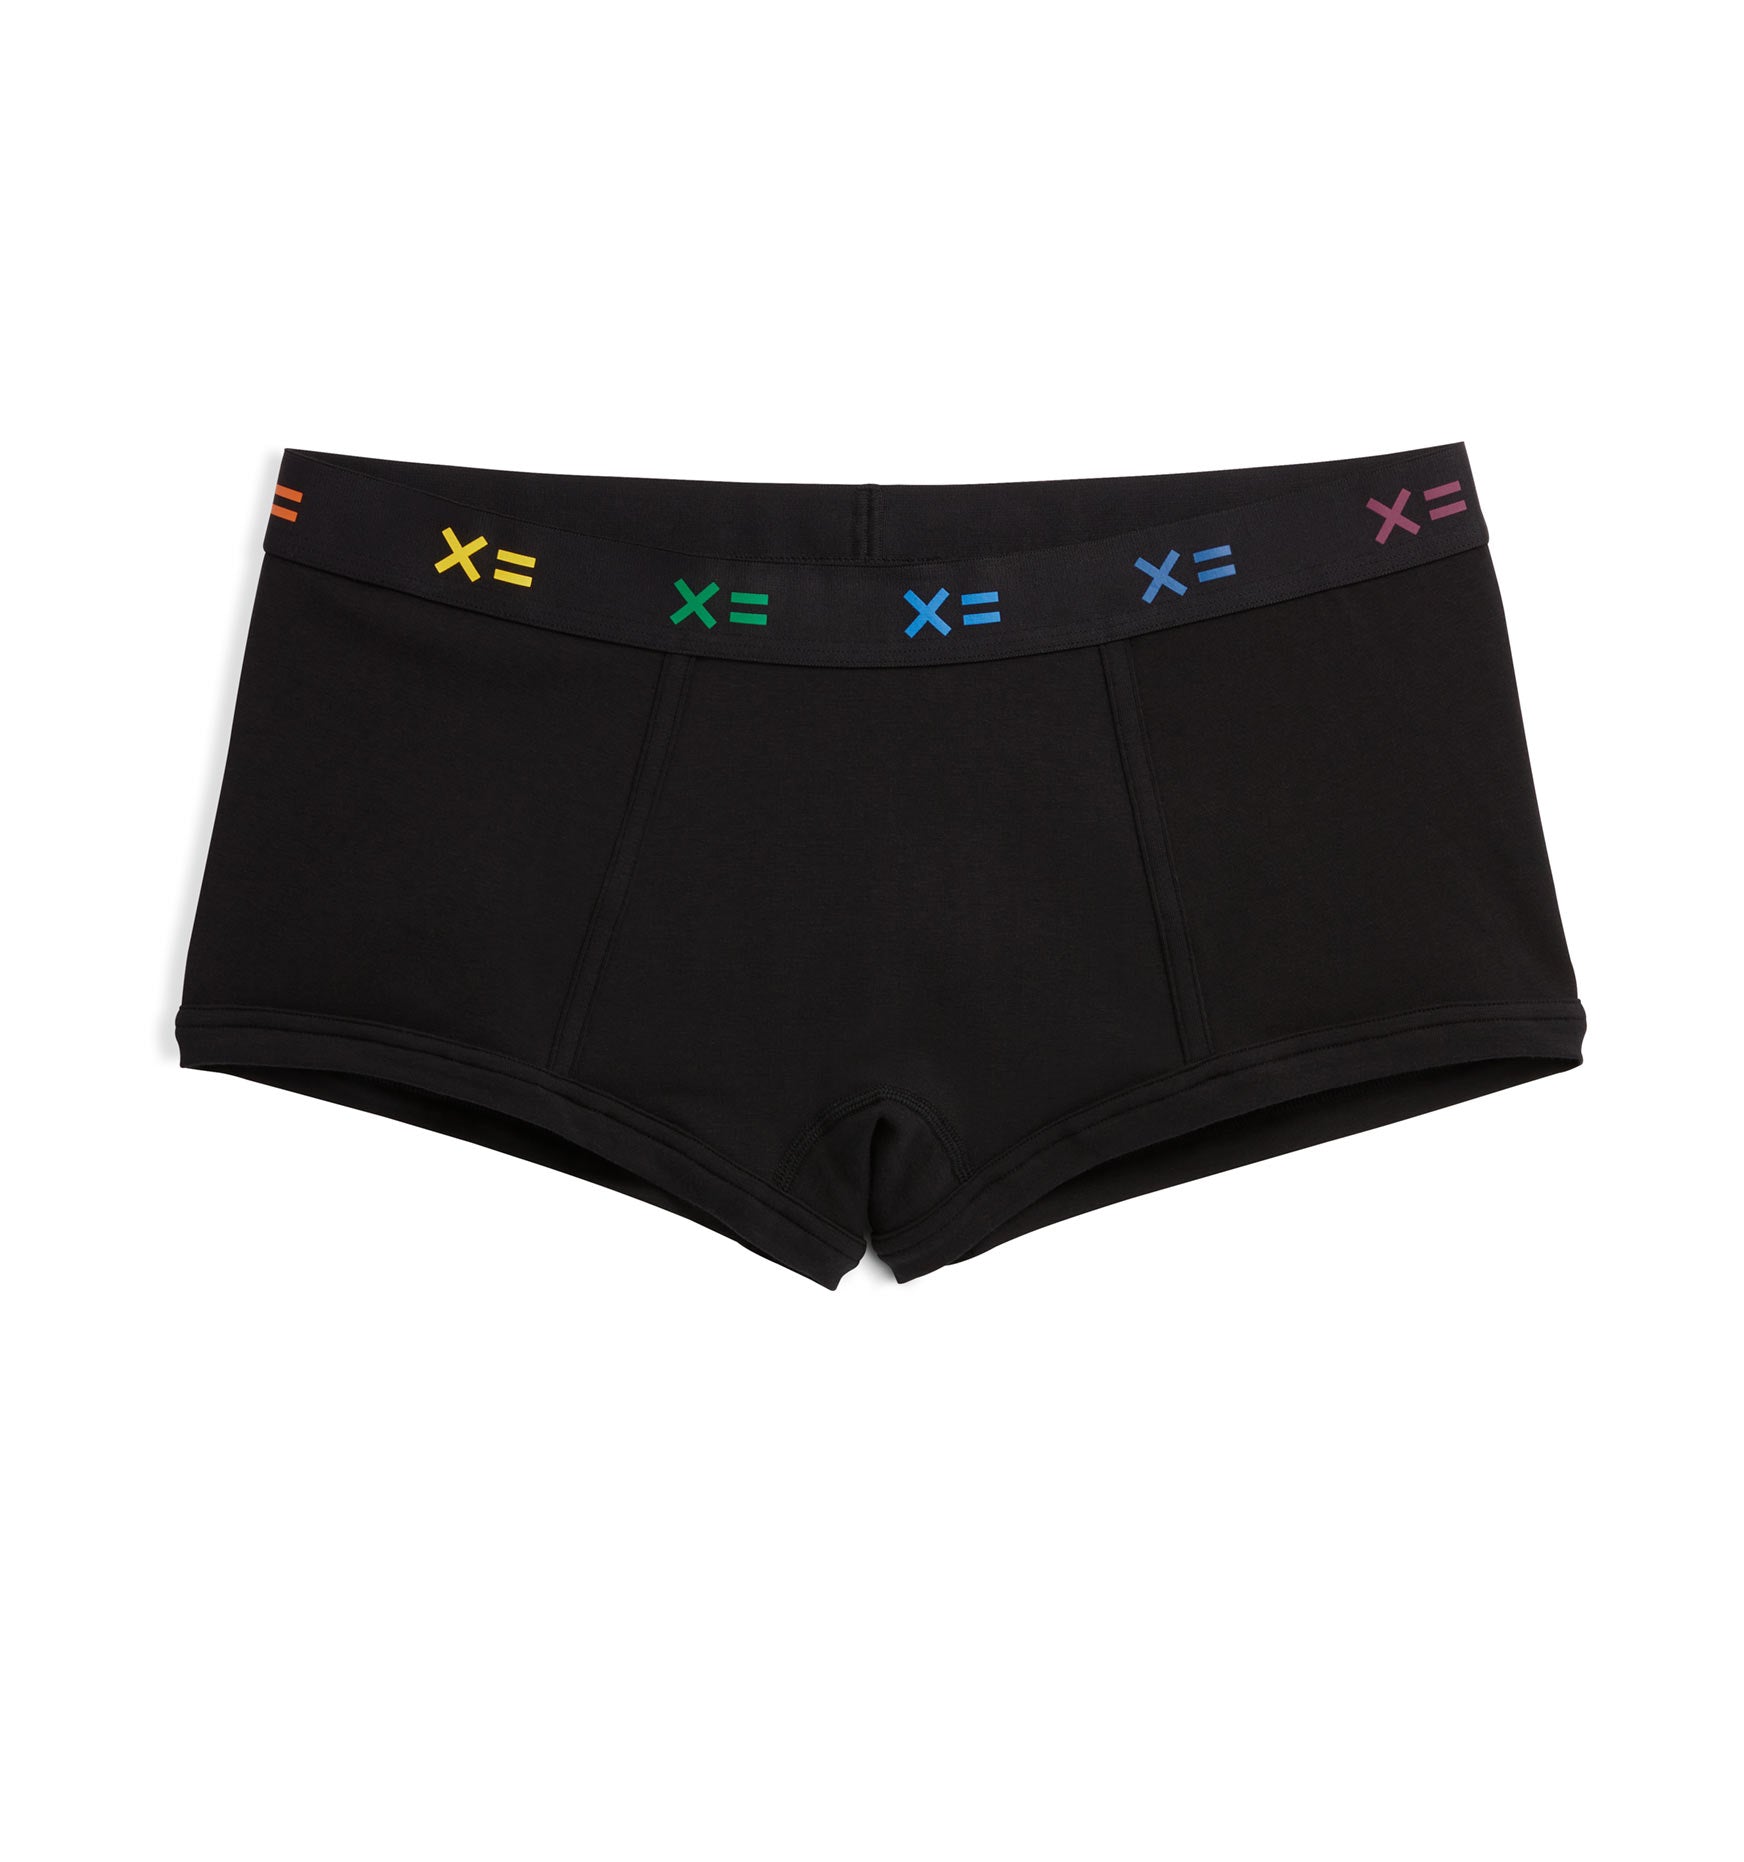 Boy Shorts - Black X= Rainbow